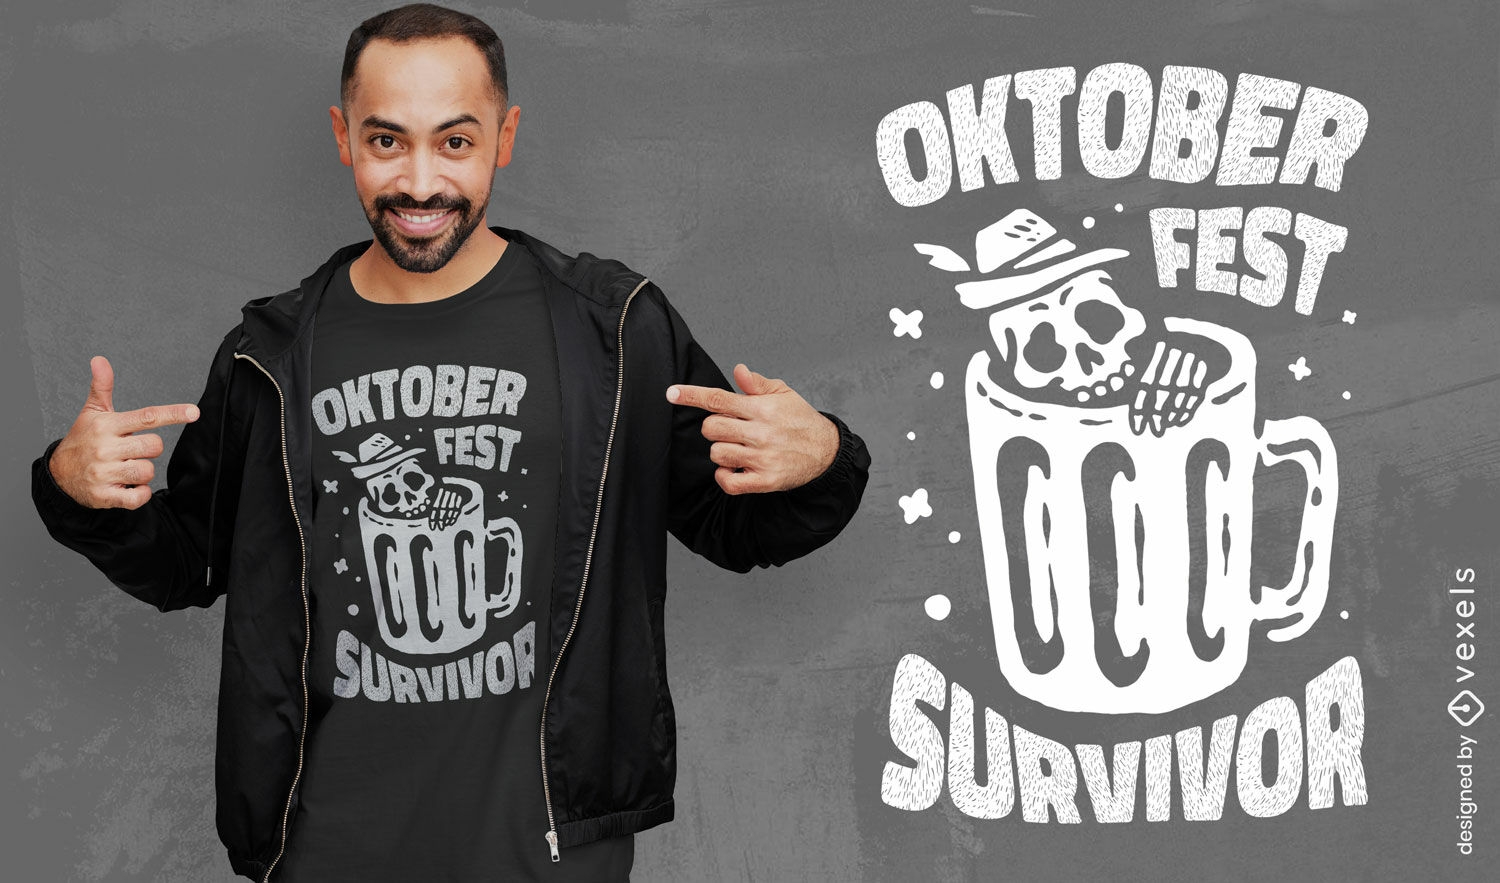 Oktoberfest survivor skeleton t-shirt design